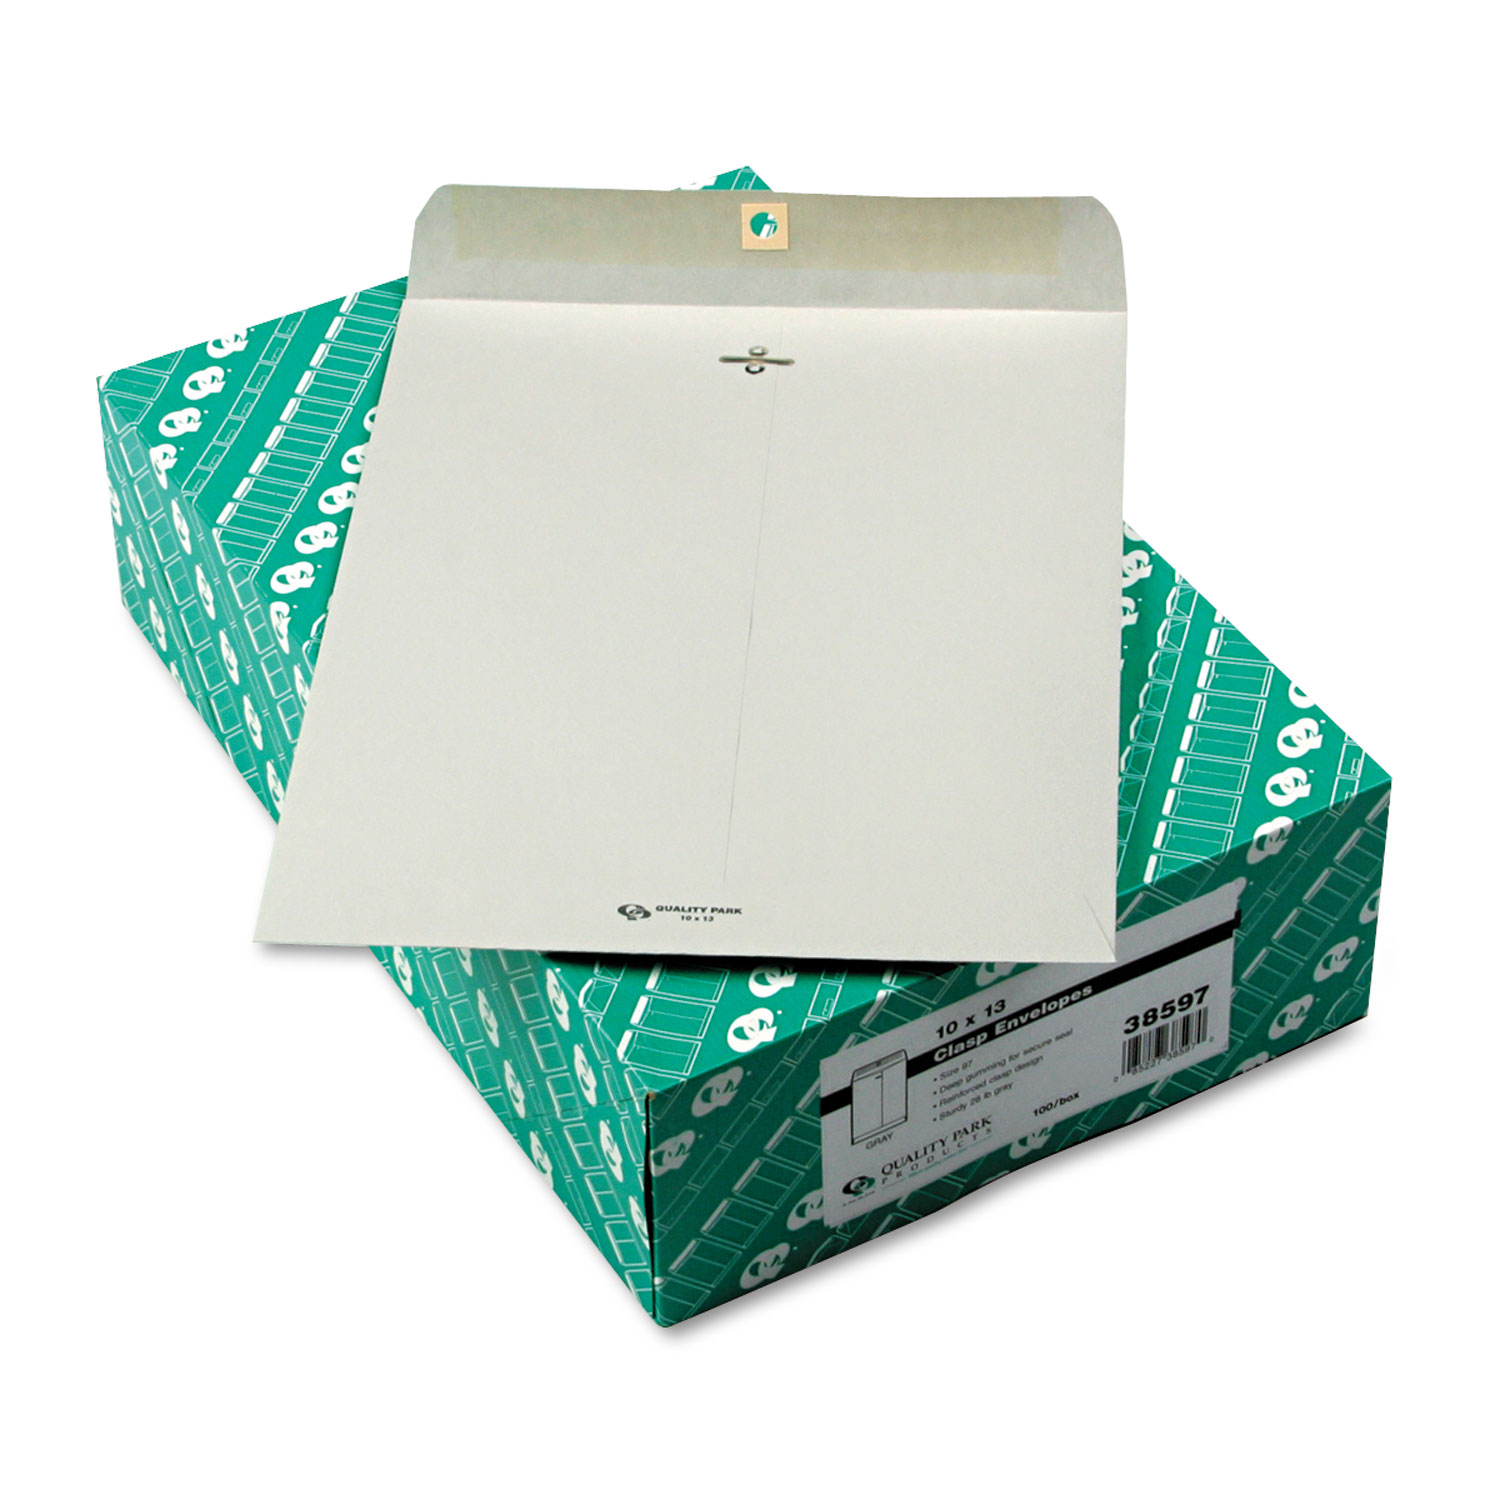 Clasp Envelope, #97, Cheese Blade Flap, Clasp/Gummed Closure, 10 x 13, Executive Gray, 100/Box